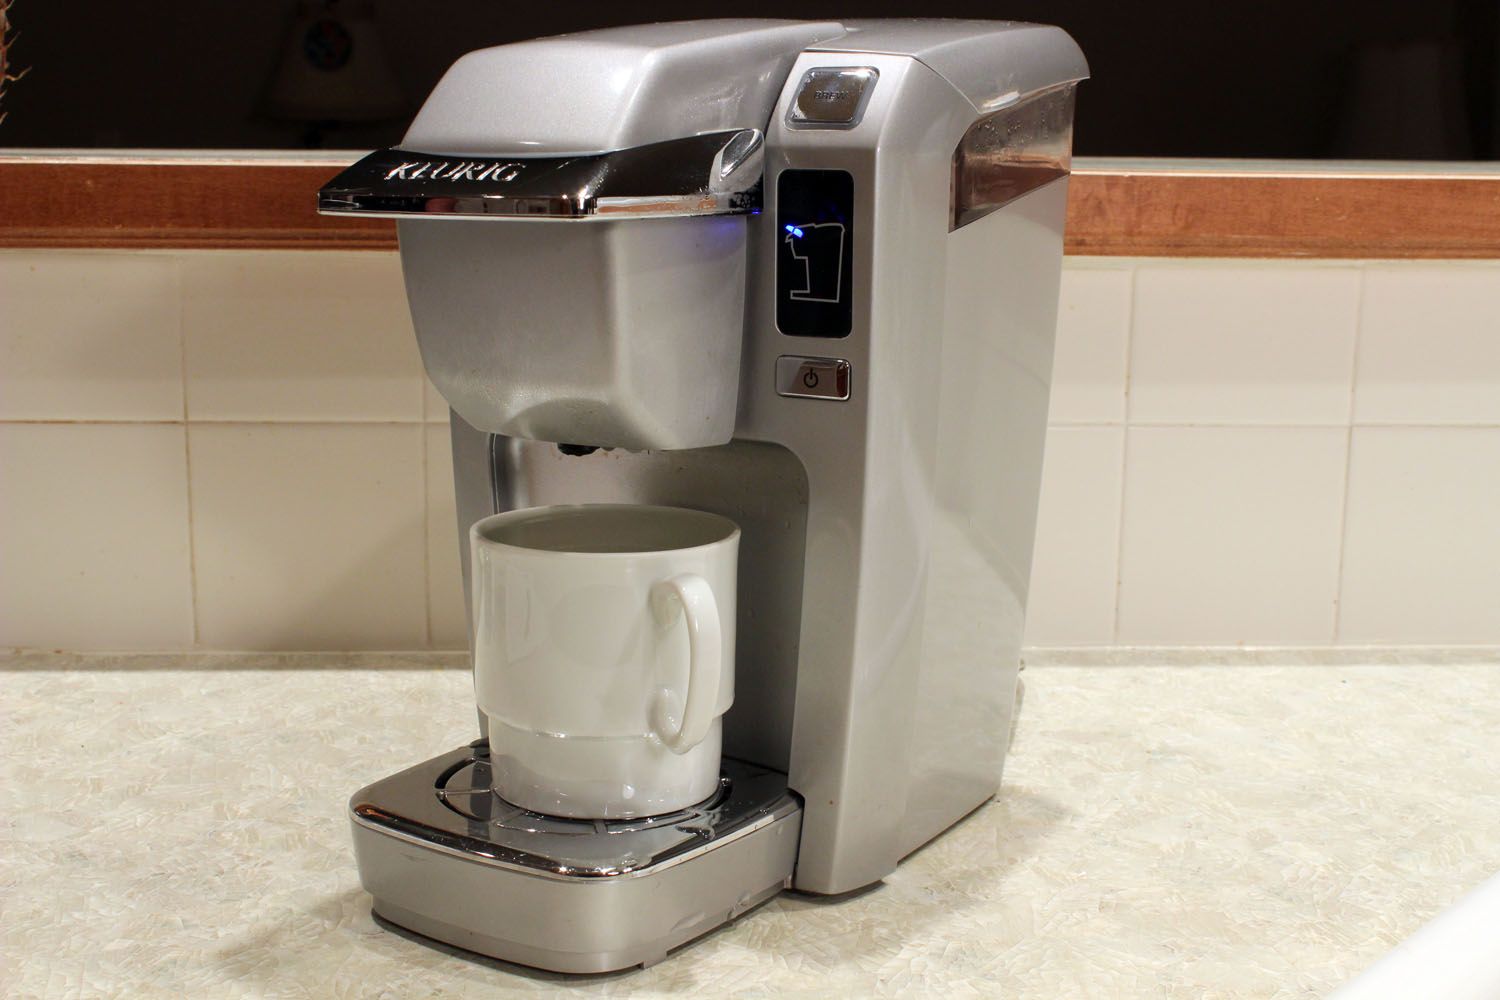 How To Prime A Keurig Coffee Machine